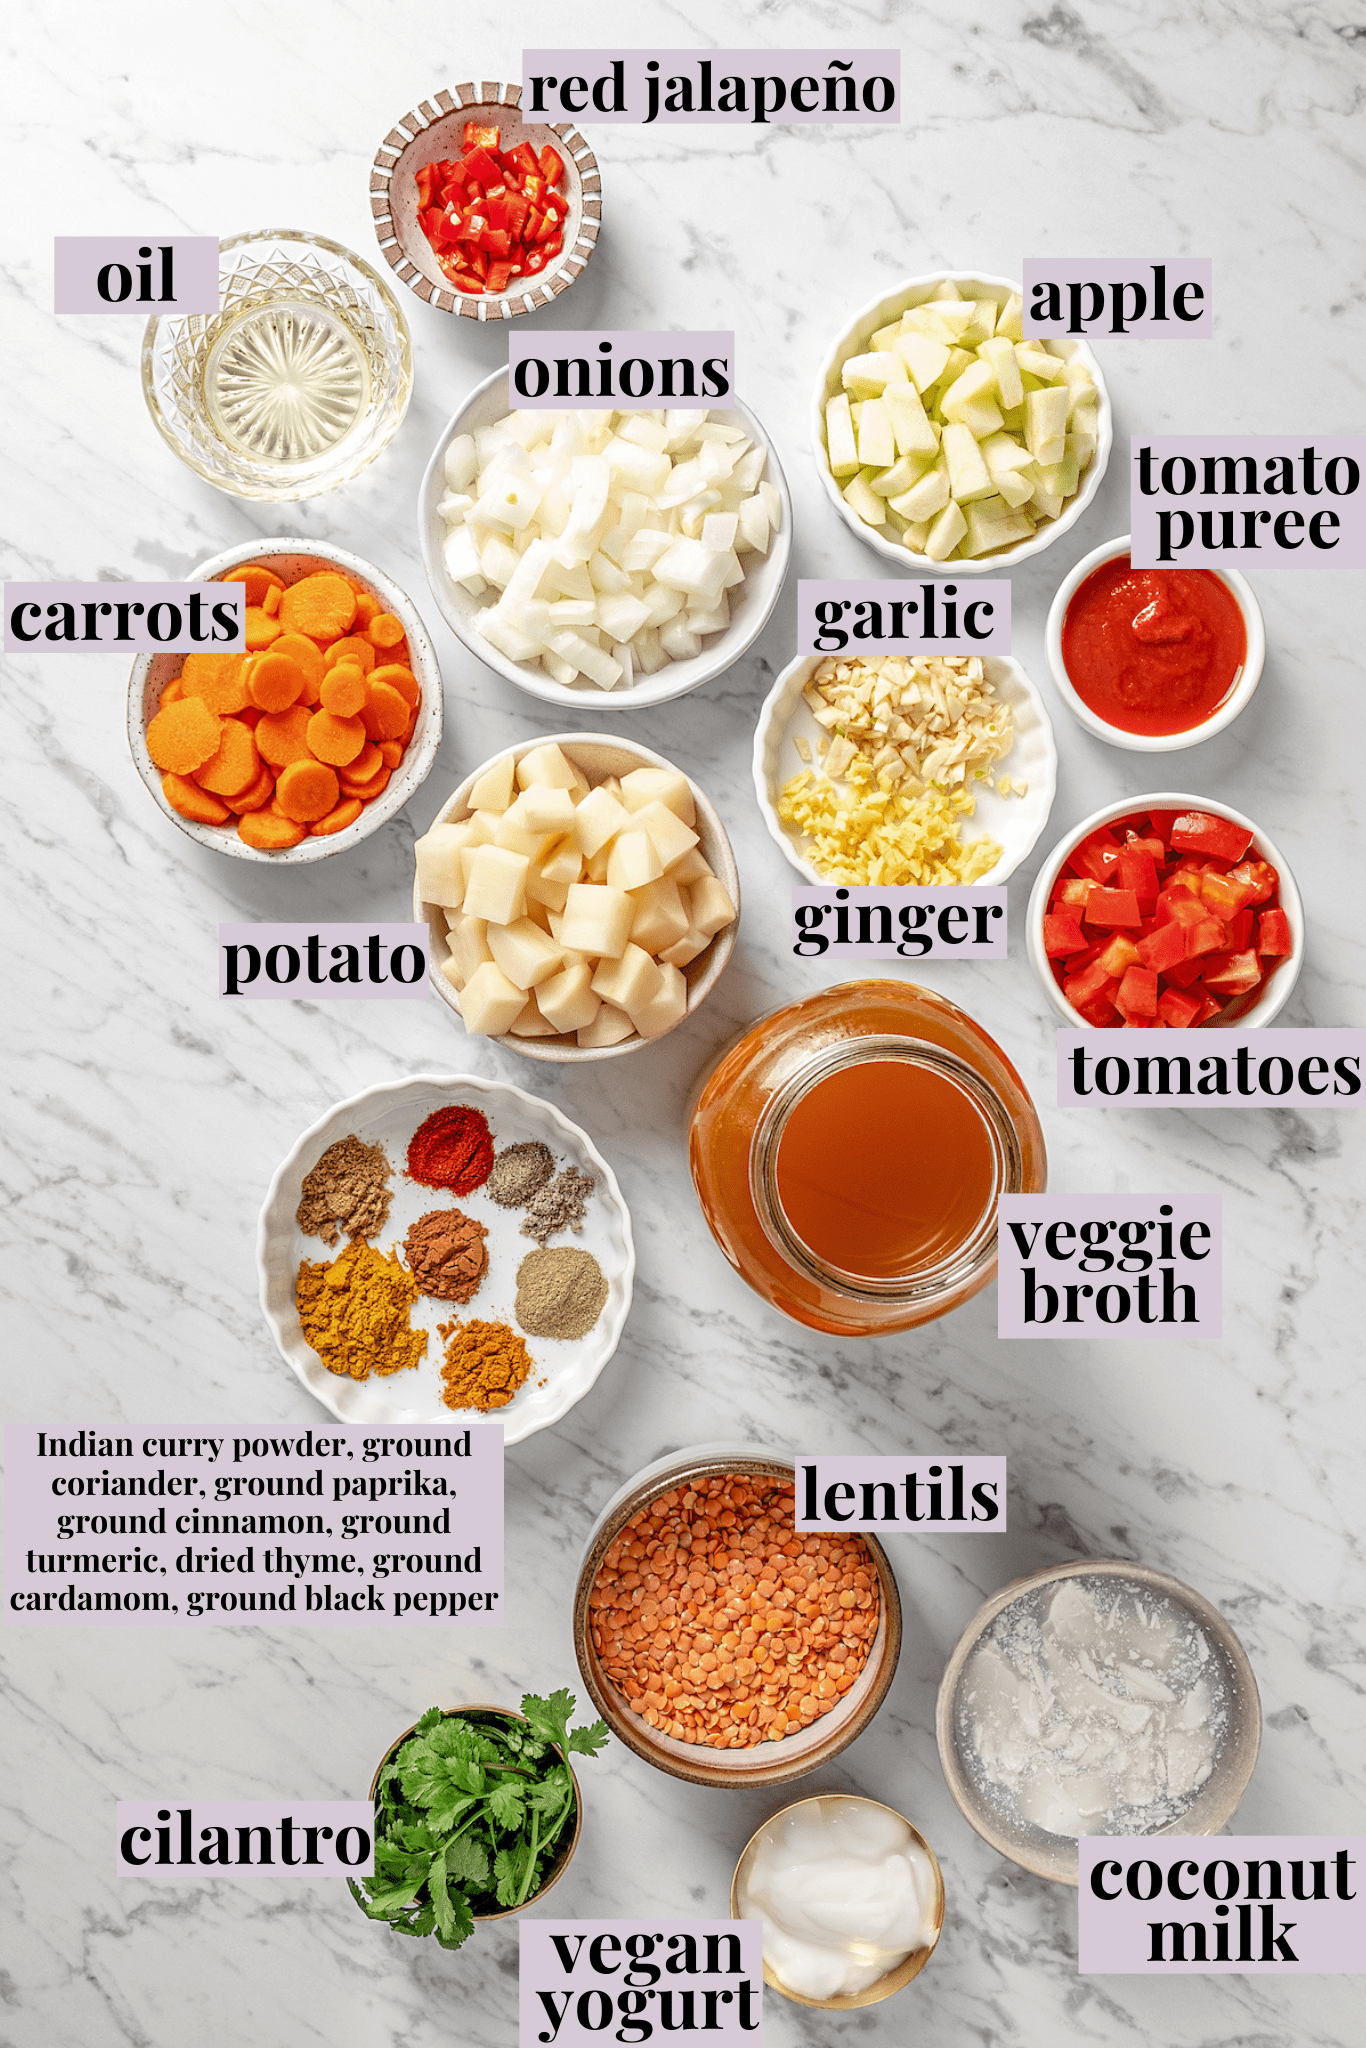 Overhead view of ingredients for vegan mulligatawny